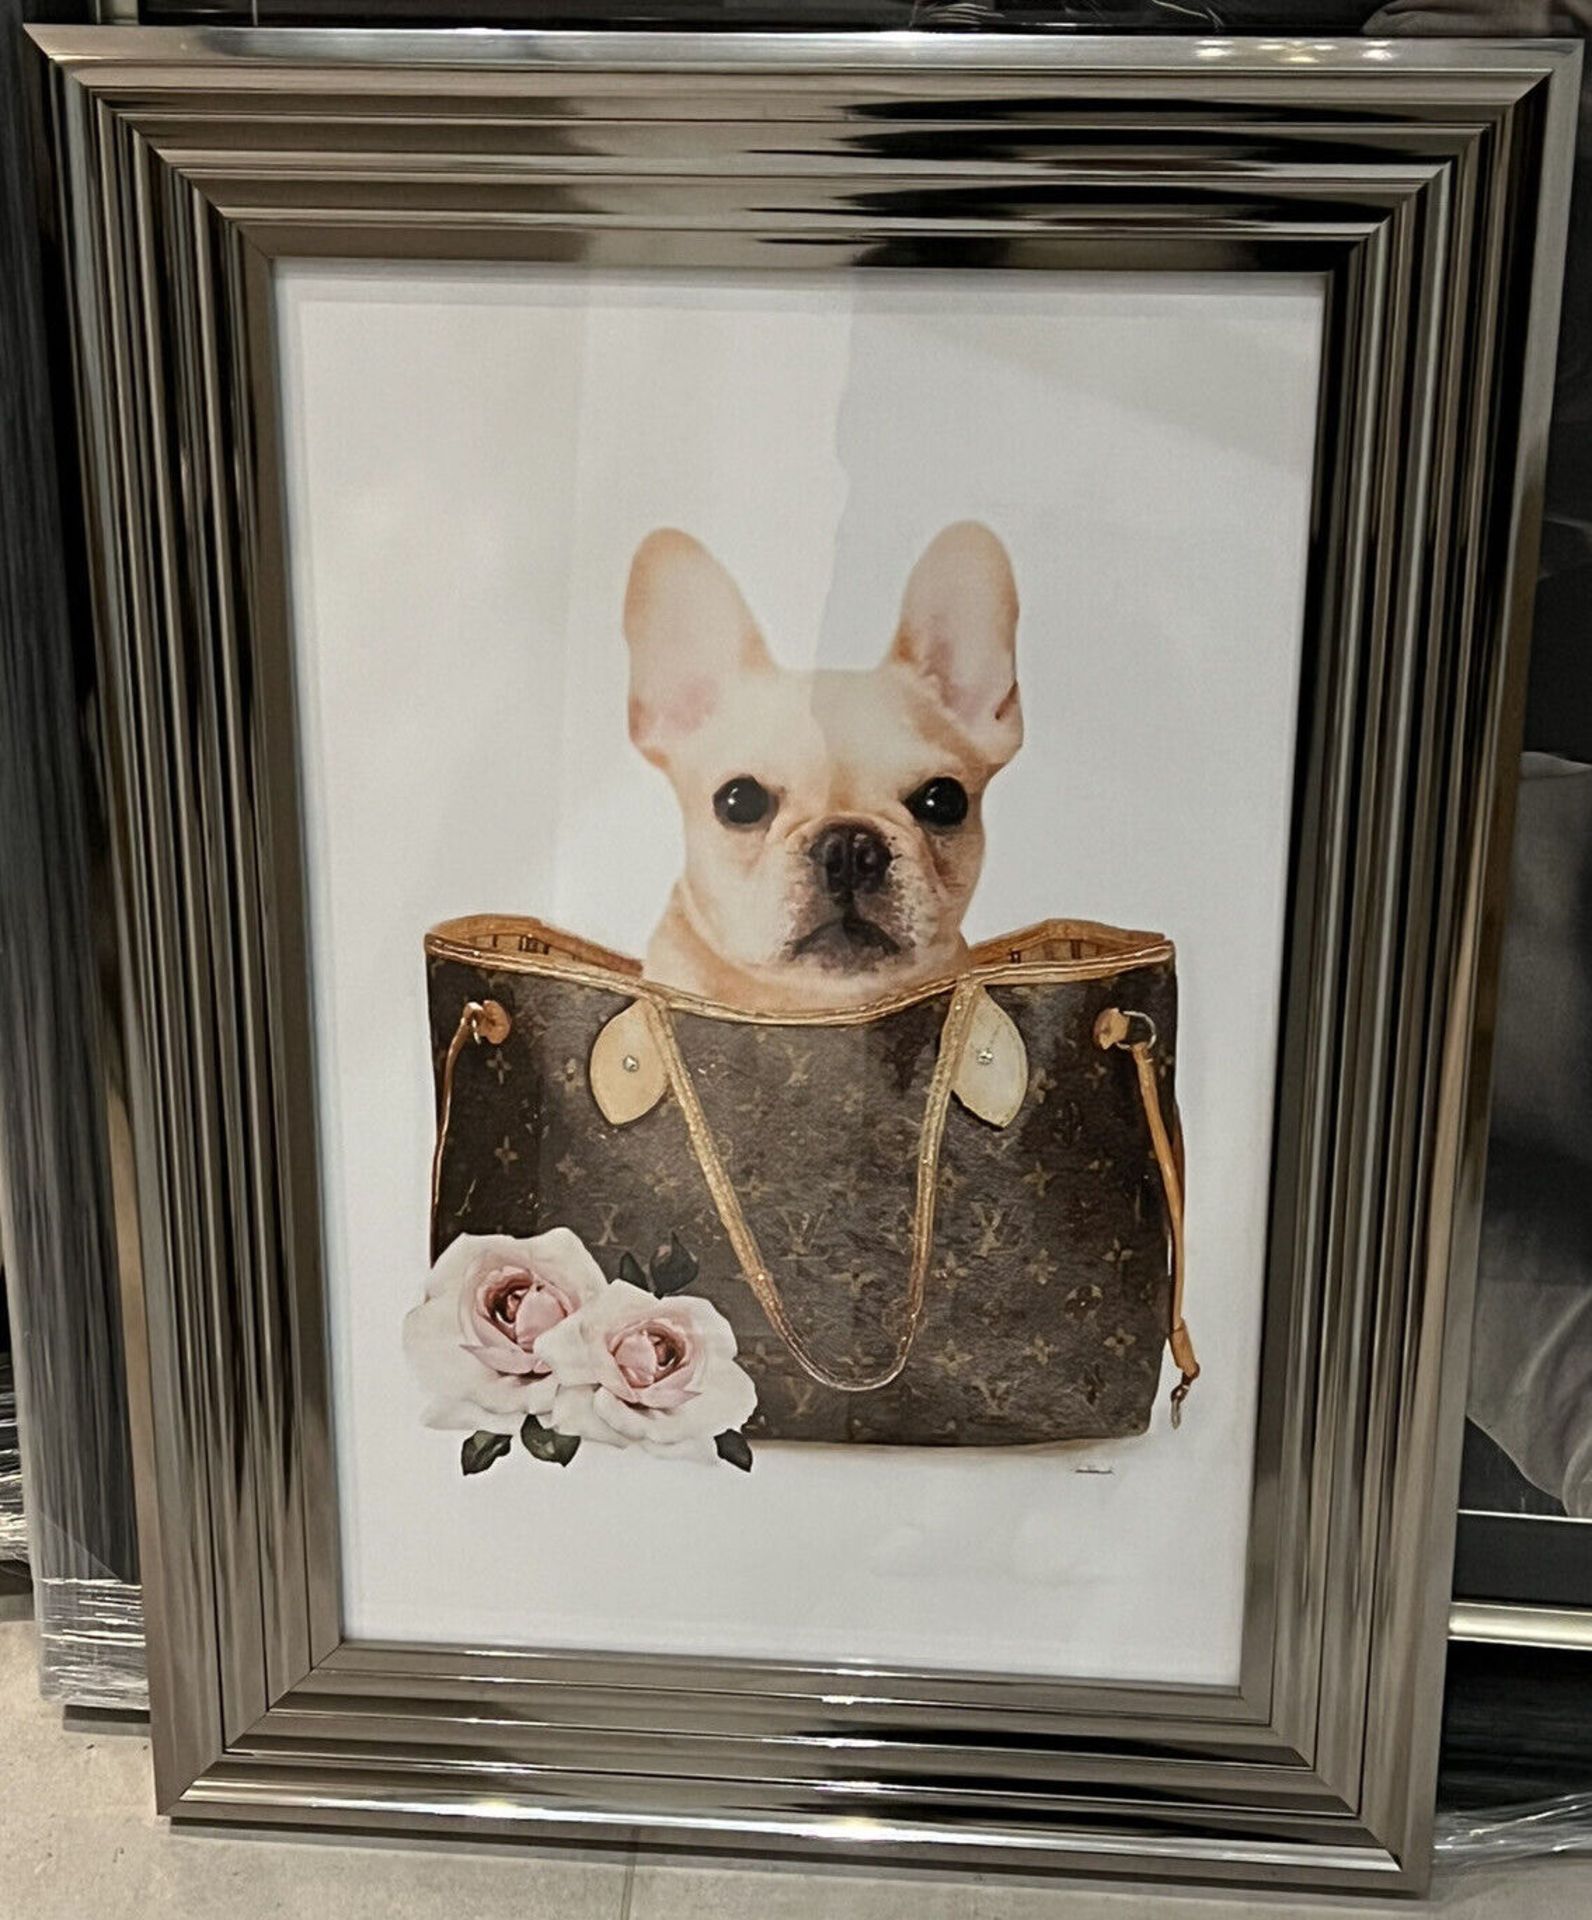 Designer Frenchie in a Handbag Art Piece - New - NO VAT !